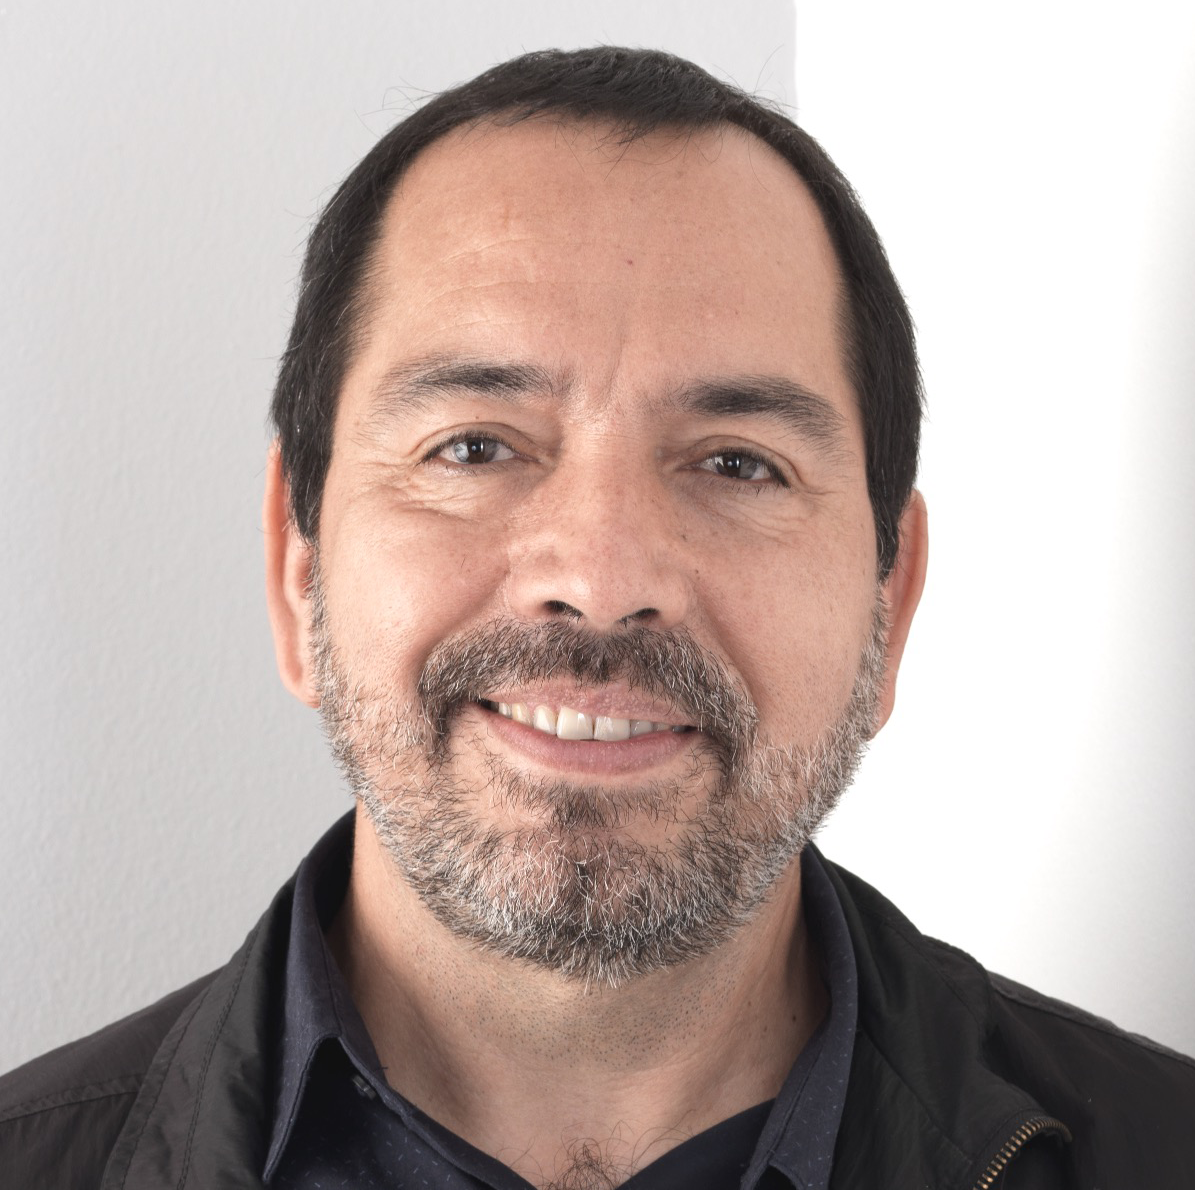 Germán Goitiandía, Creador de Campañas Publicitarias Digitales, Diseñador Web, Asesor. Contactame!